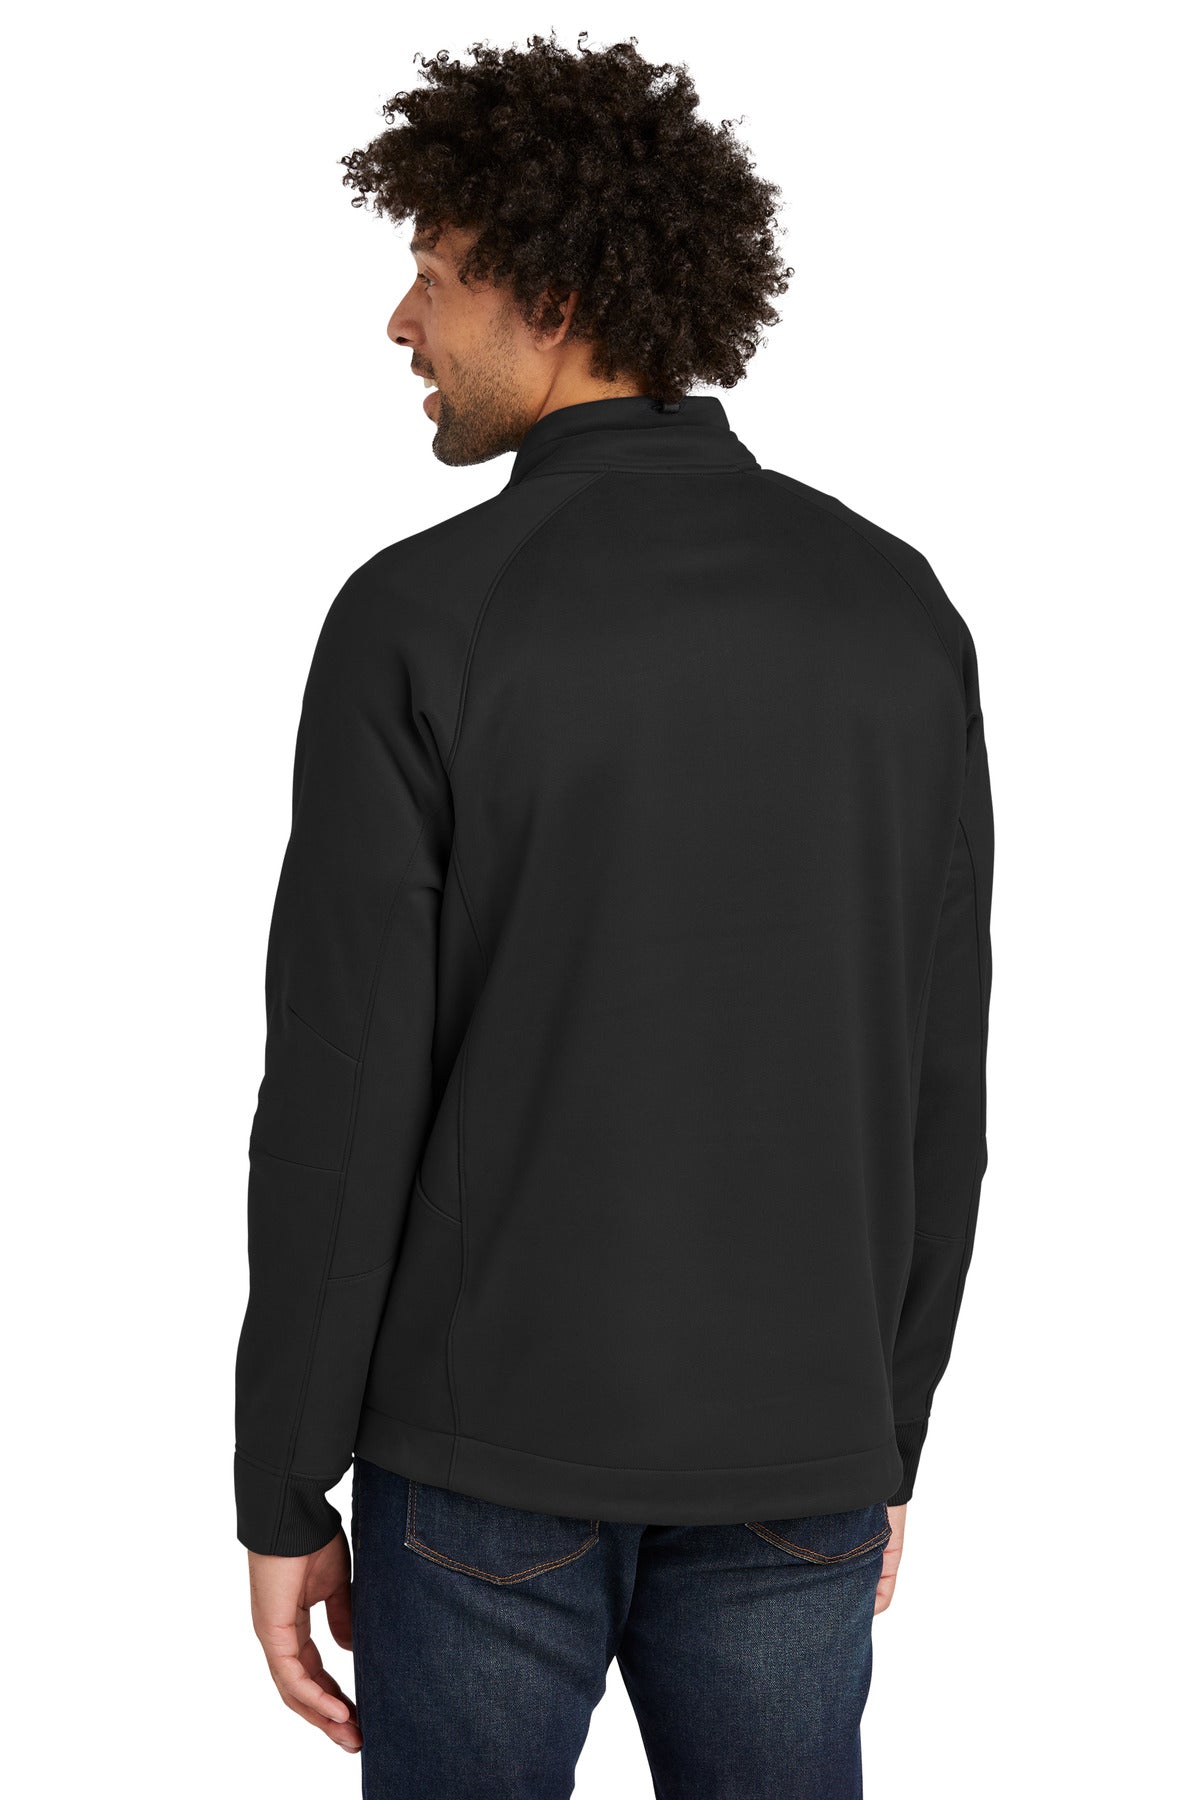 New Era ® Venue Fleece 1/4-Zip Pullover. NEA523 - DFW Impression